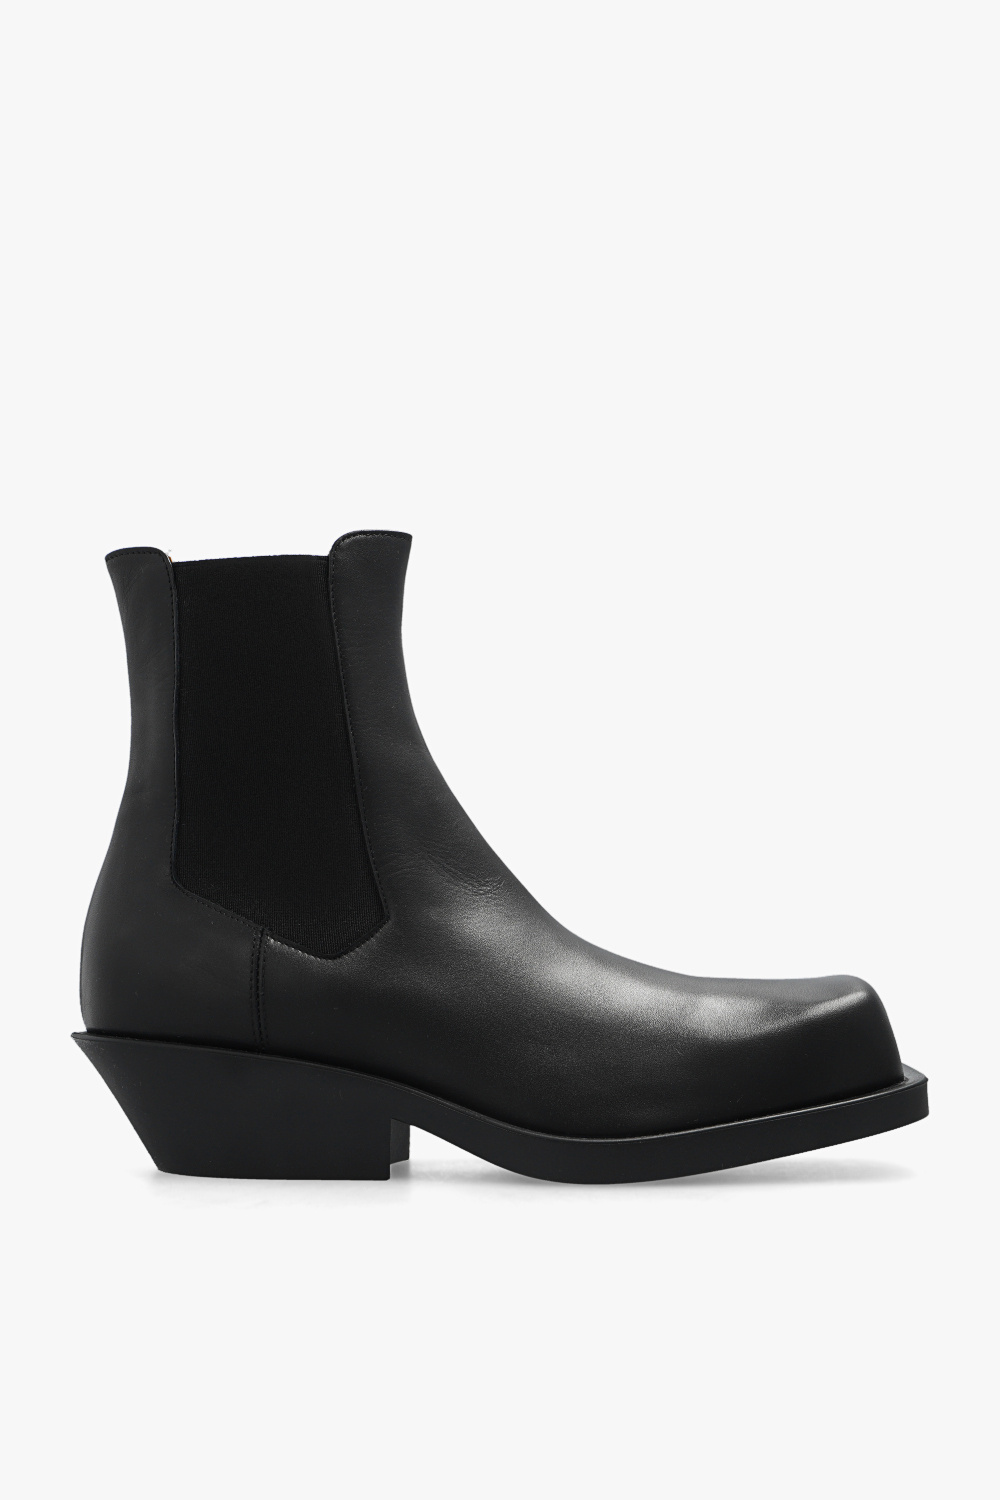 Marni Leather Chelsea boots